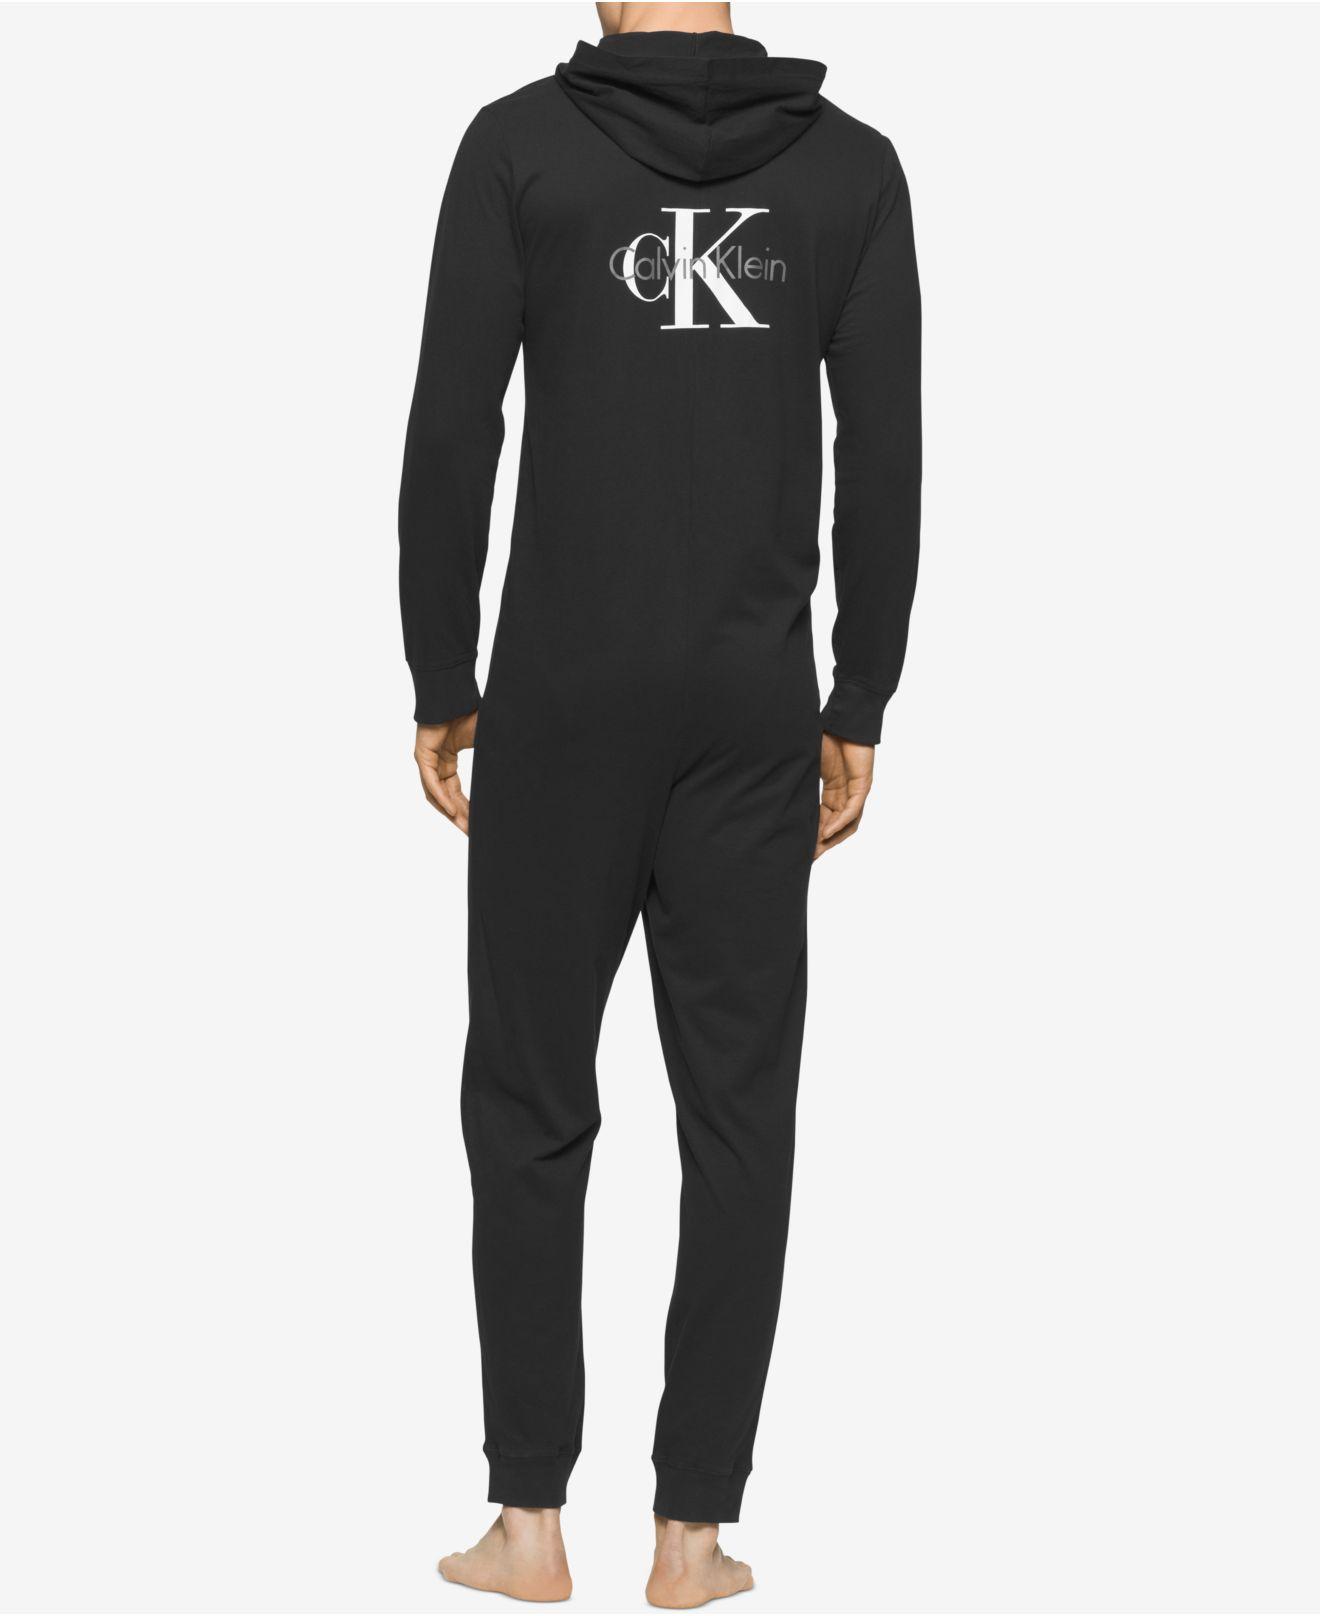 Calvin Klein Cotton Men's Ck Origins Hooded Jumpsuit in Black for Men - Lyst